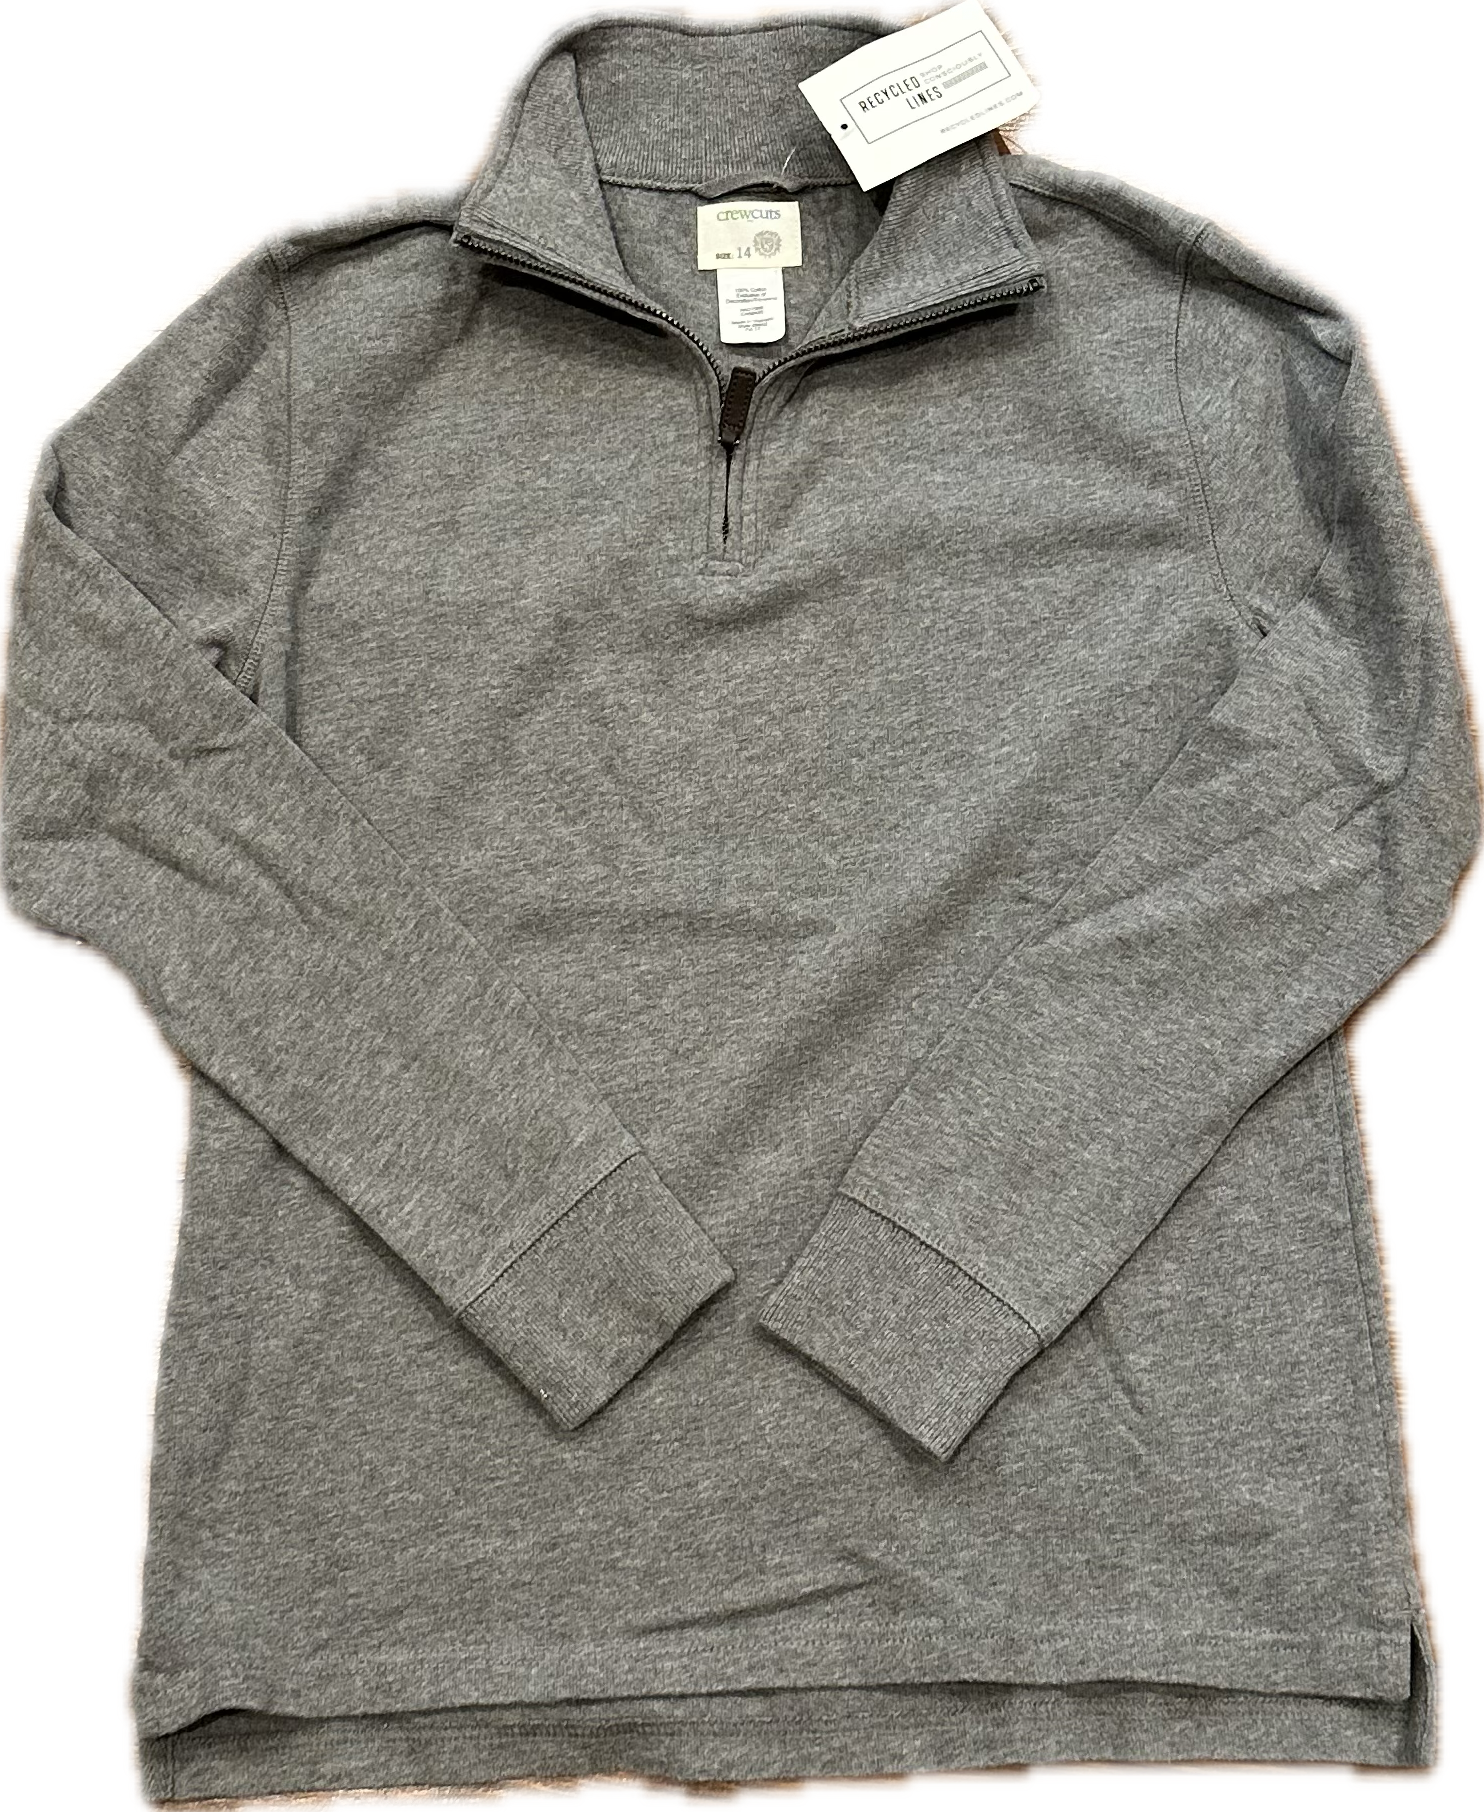 Crewcuts 1/4 Zip Pullover, Gray Boys Size 14